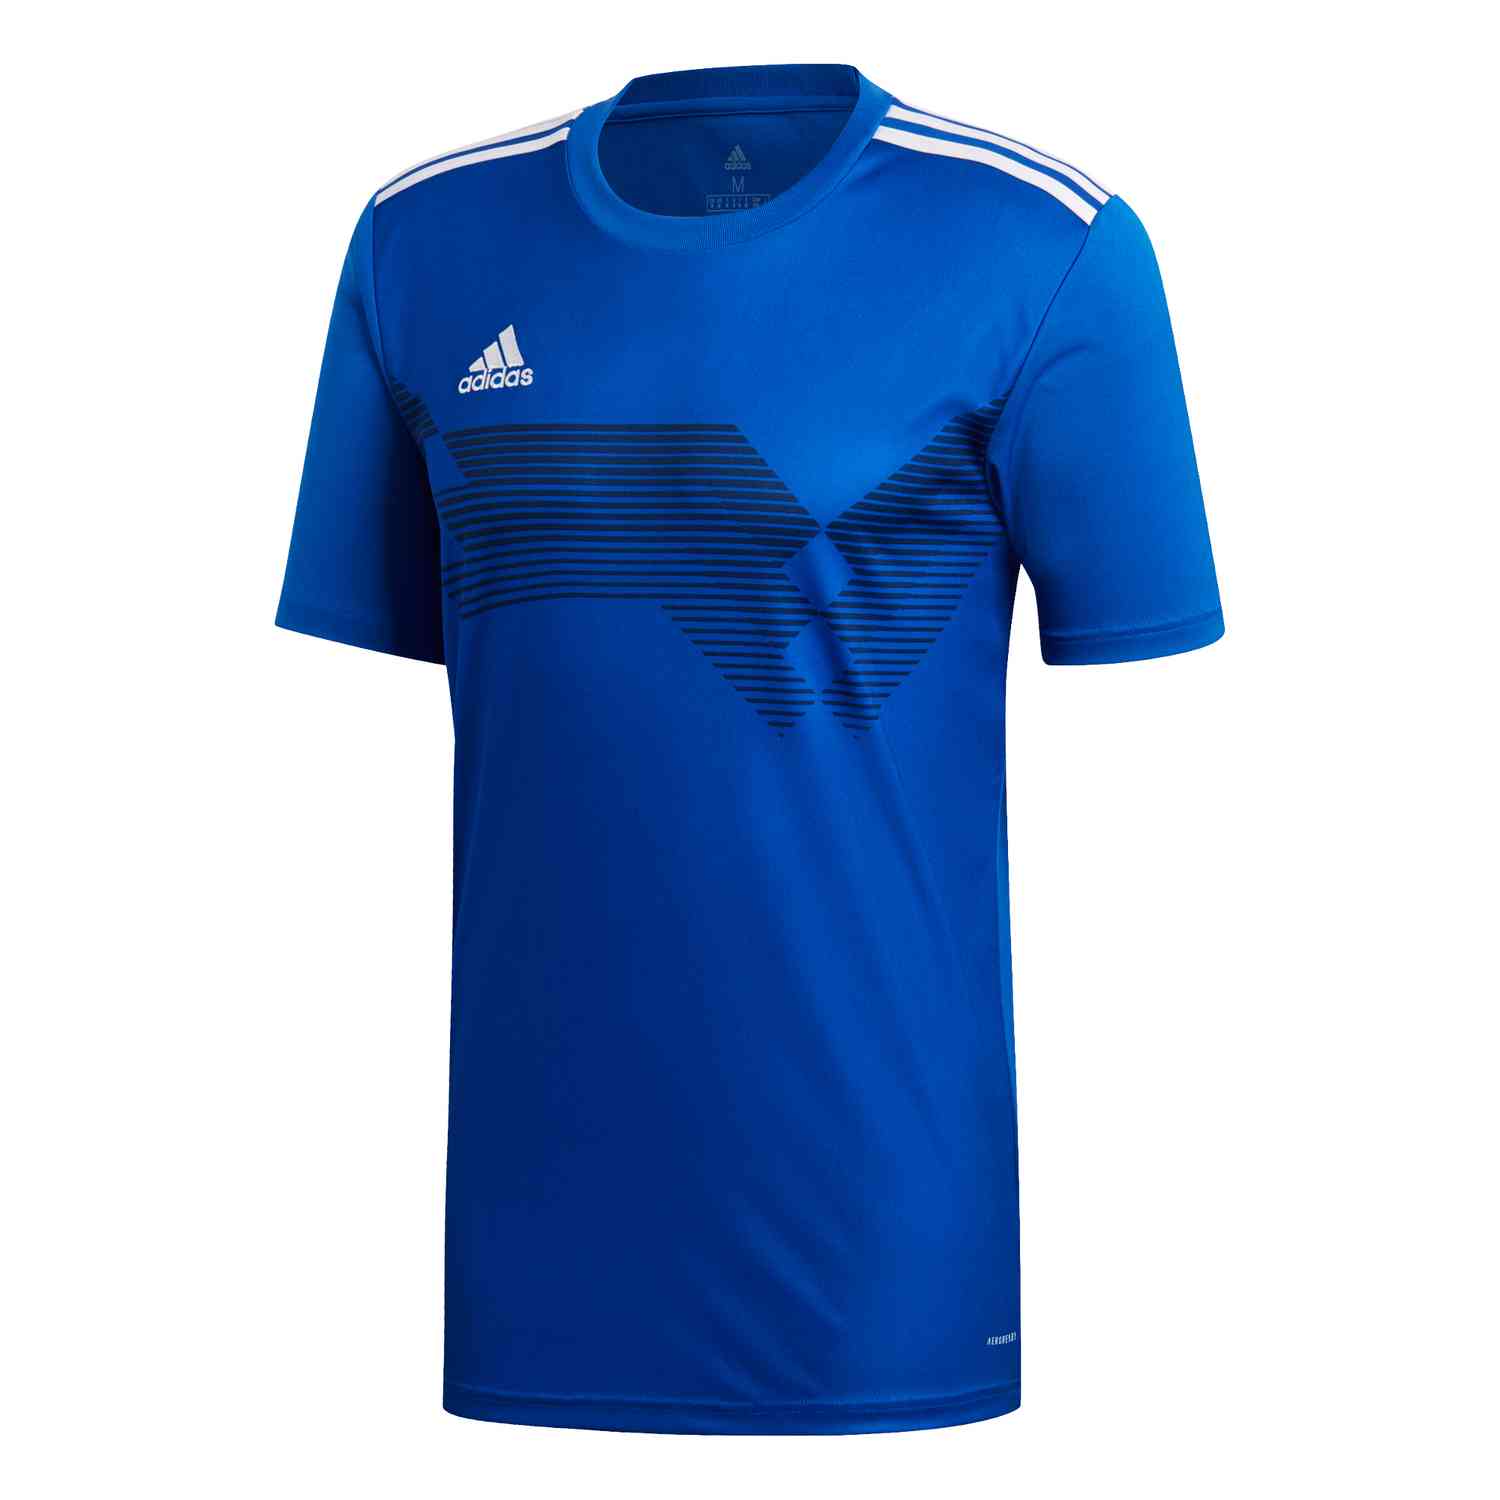 adidas Campeon 19 Jersey - Bold Blue/White - SoccerPro